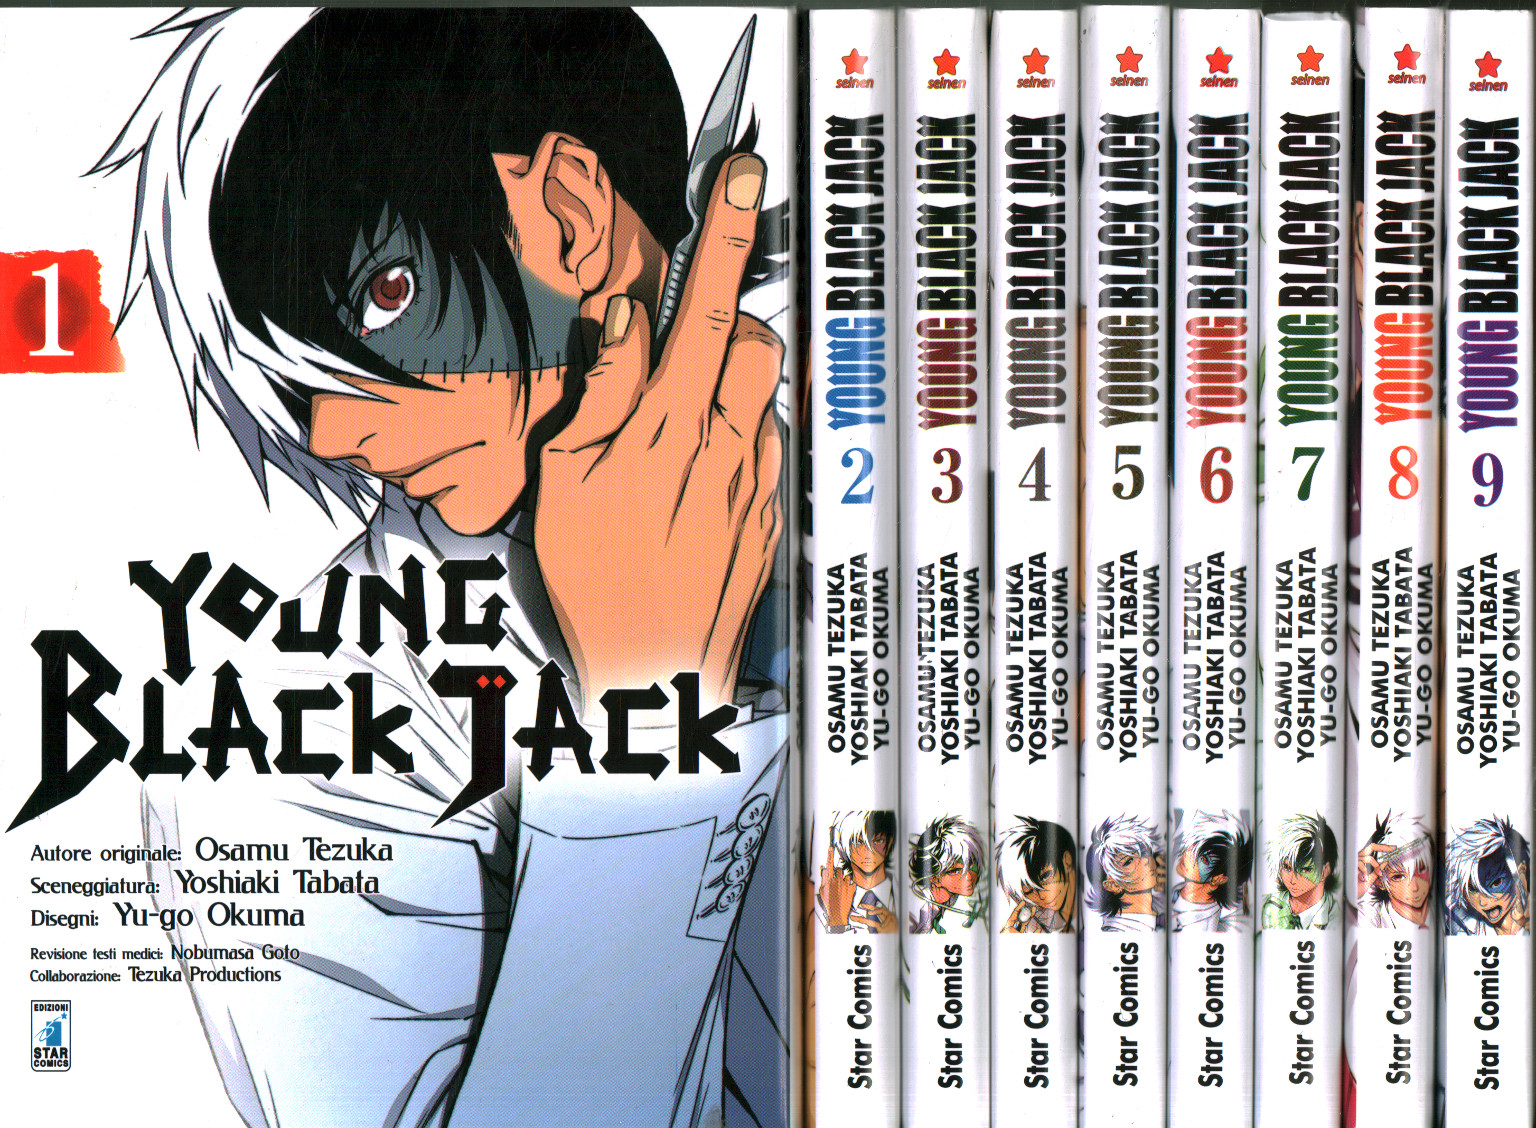 Jeune Black Jack. Séquence Complète (9 Volumes), Osamu Tezuka Yoshiaki Tabata Yu-go Okuma